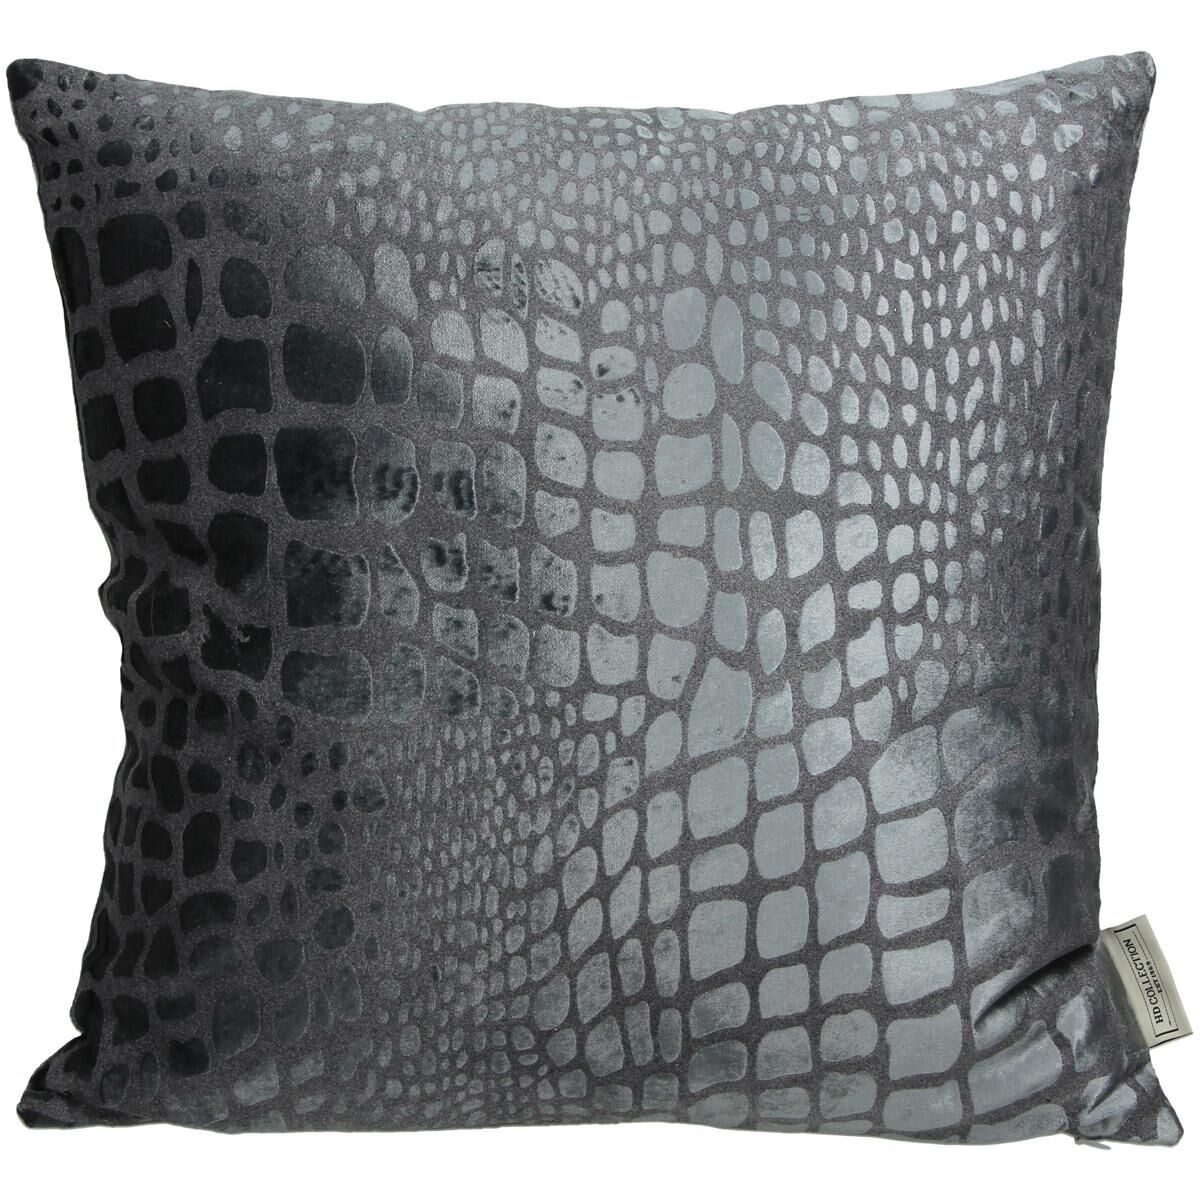 Cushion Leopard Velvet Grey 45x45cm